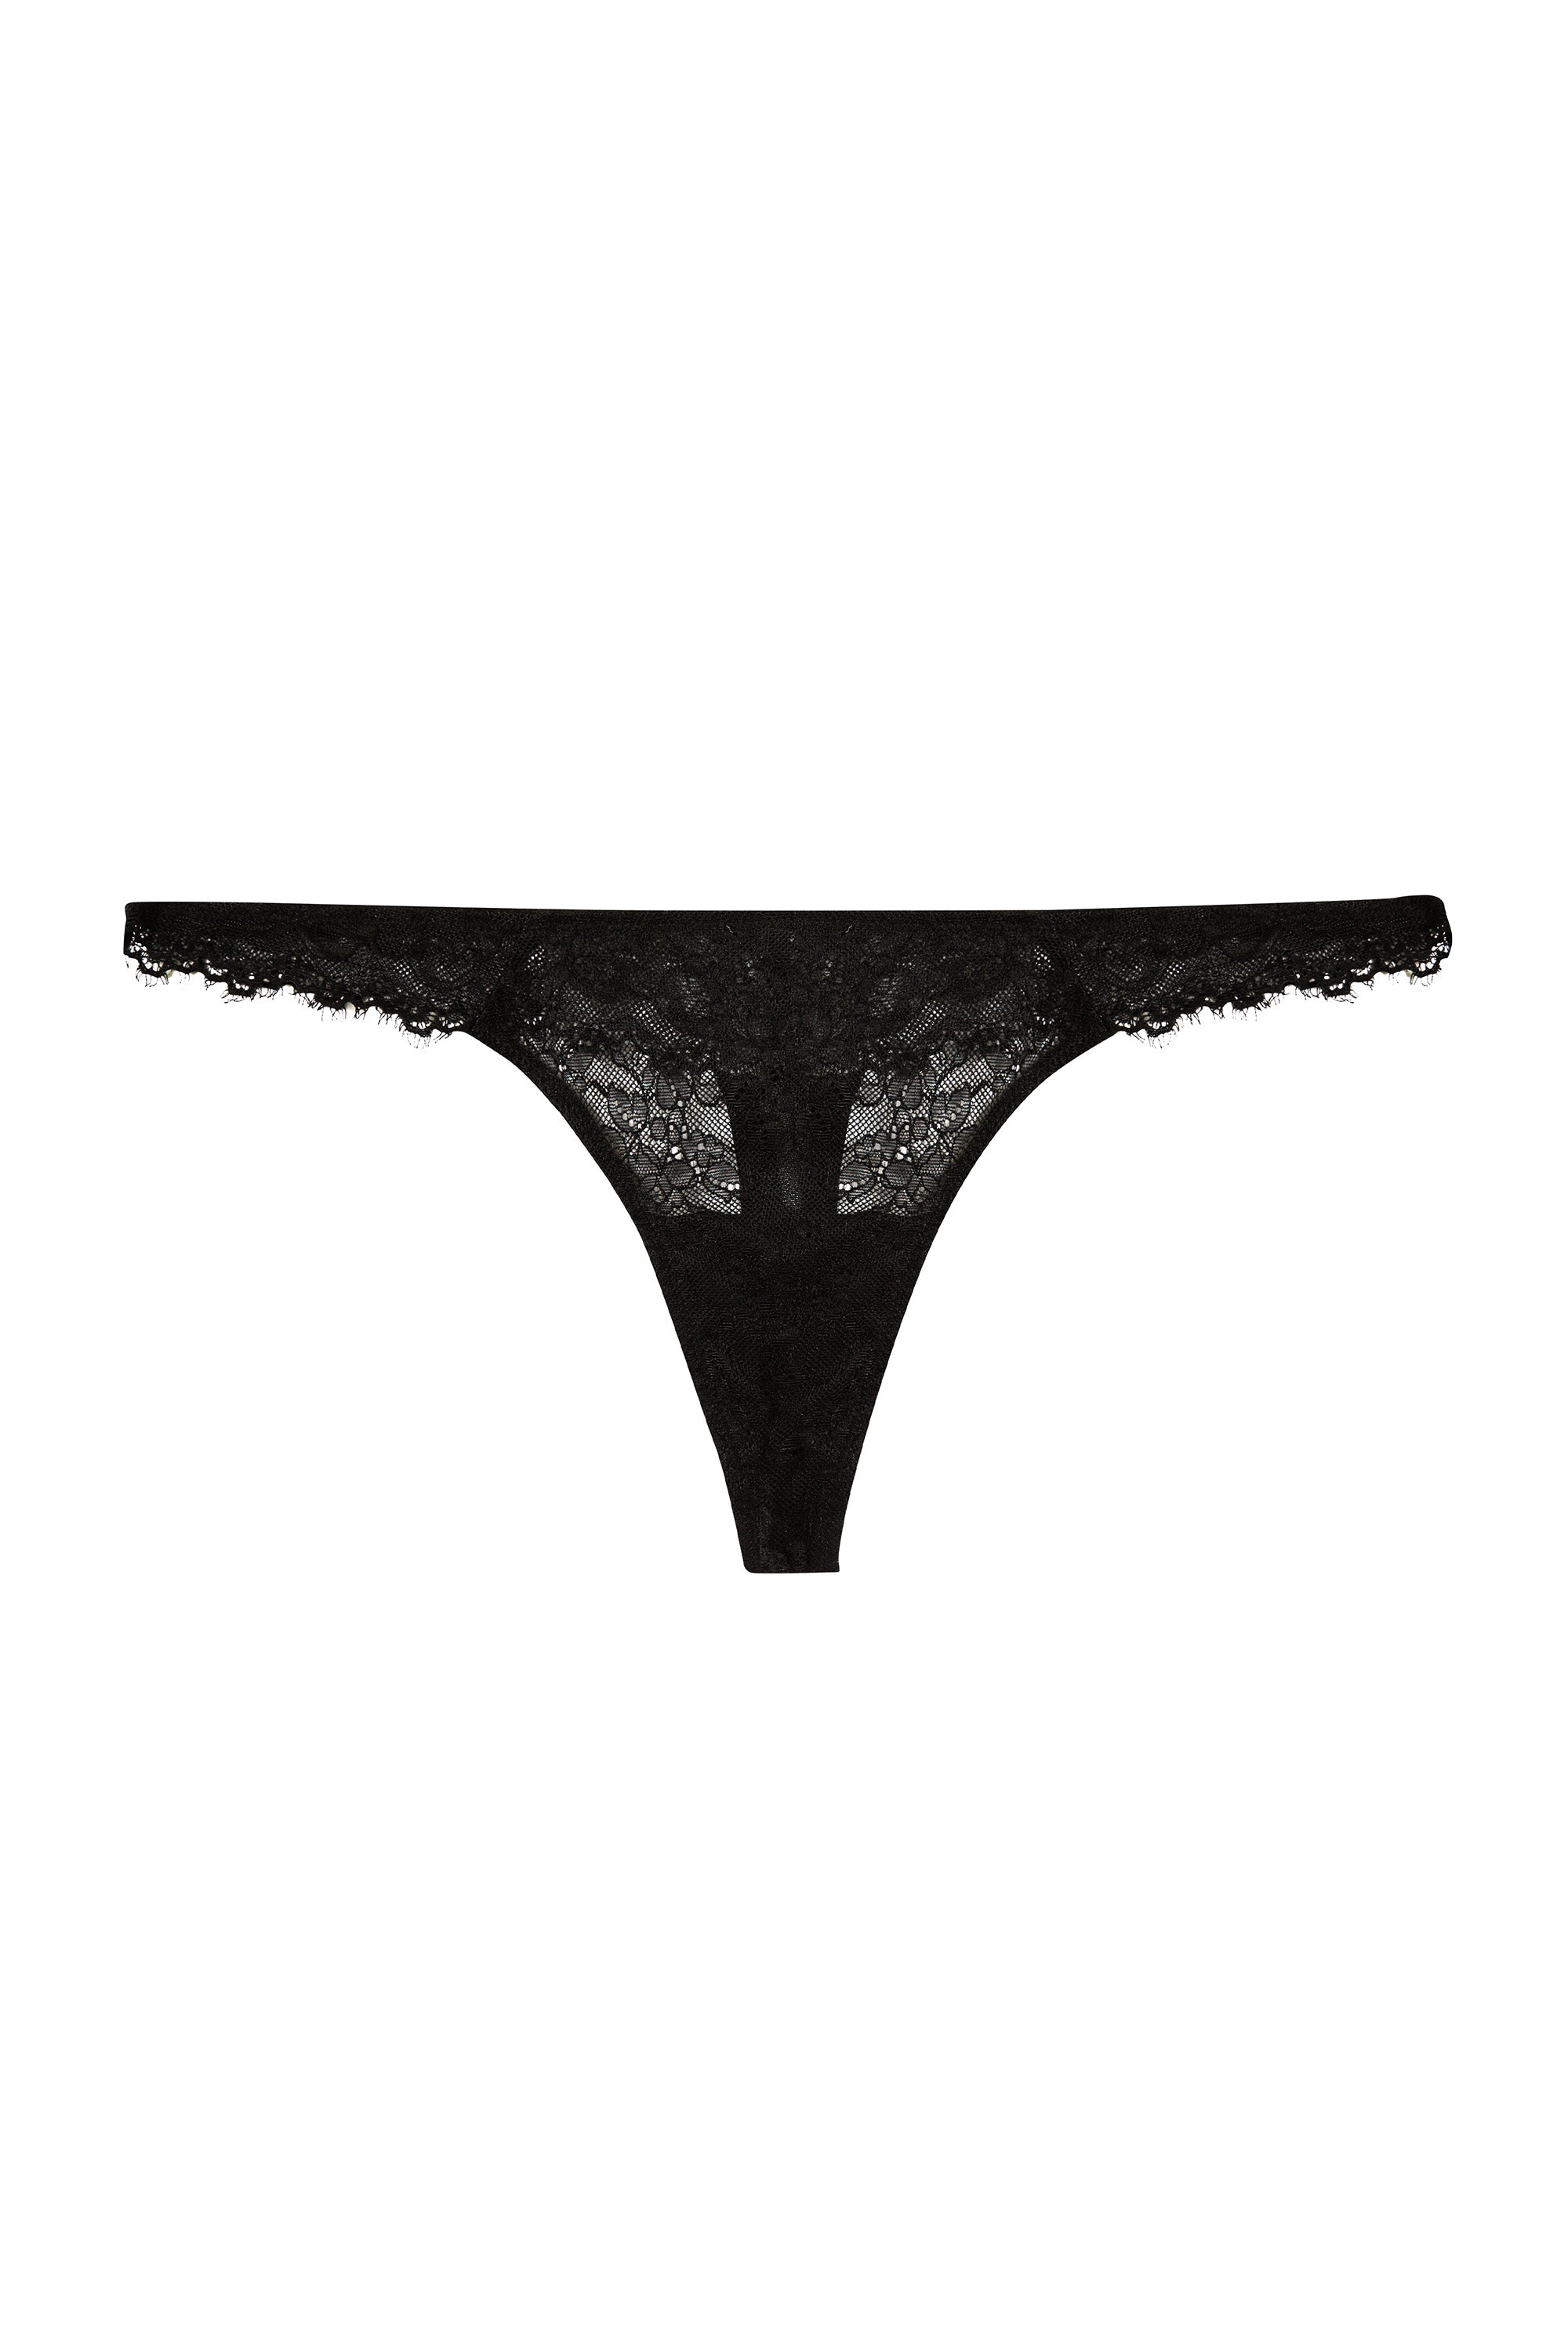 Rosalyn Black Lace thong - sizes 4-16 - Toronto Lingerie - Gigi's